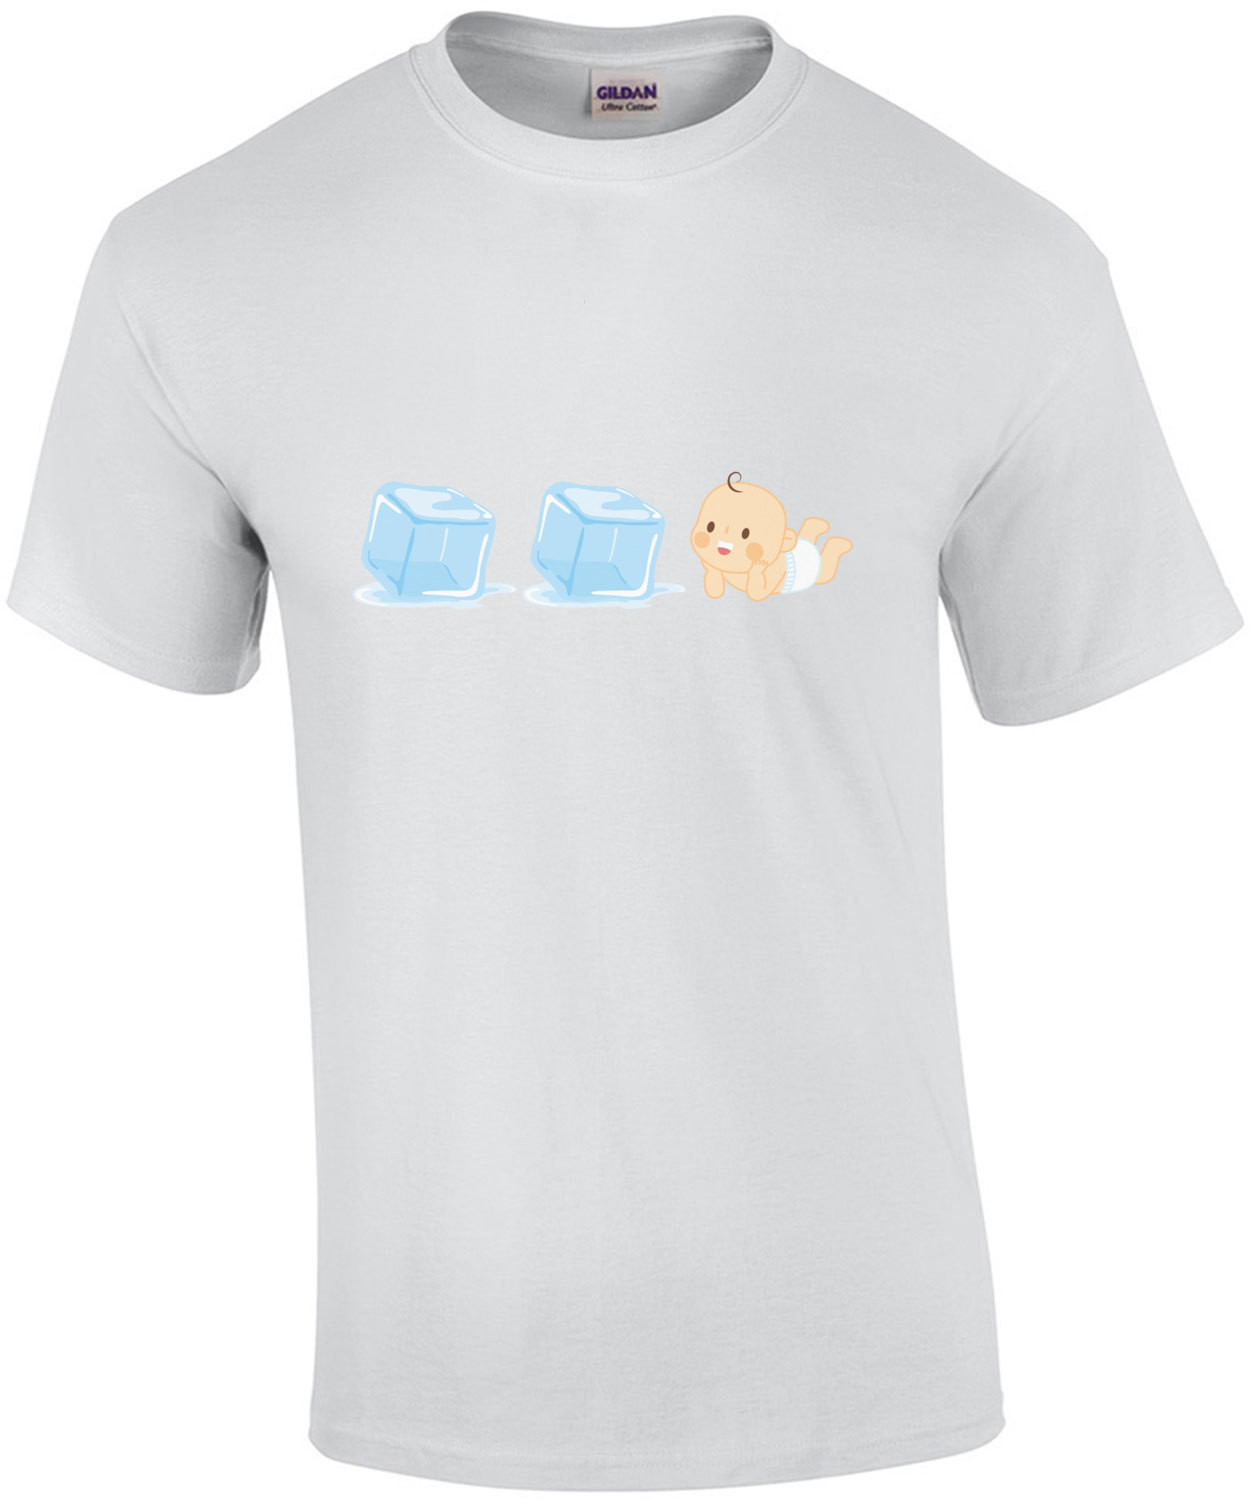 Ice Ice Baby - Vanilla Ice - rap t-shirt - 90's T-Shirt